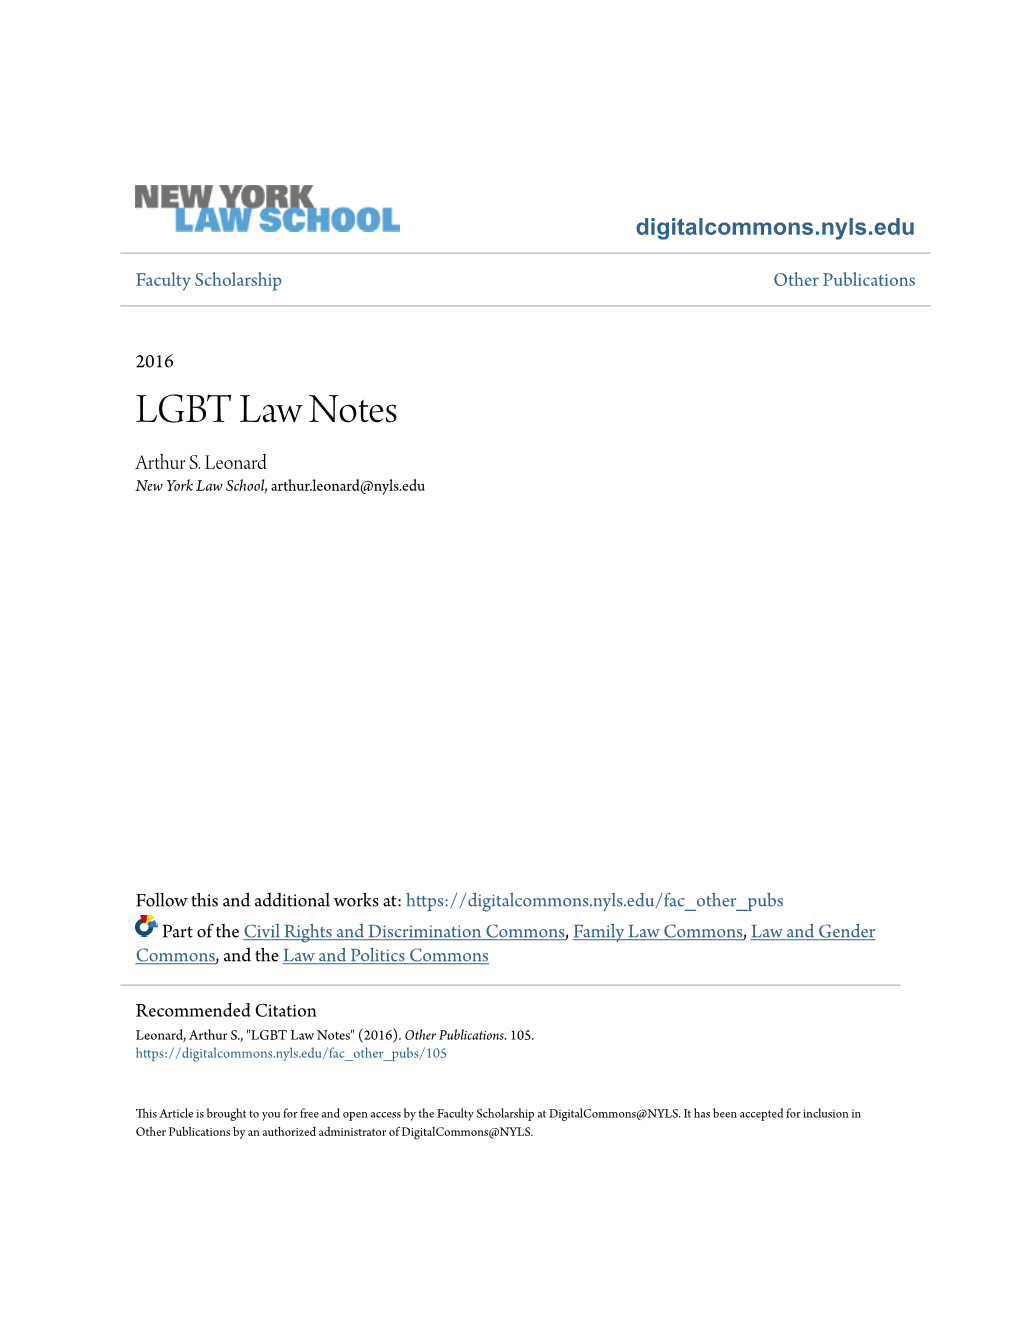 LGBT Law Notes Arthur S